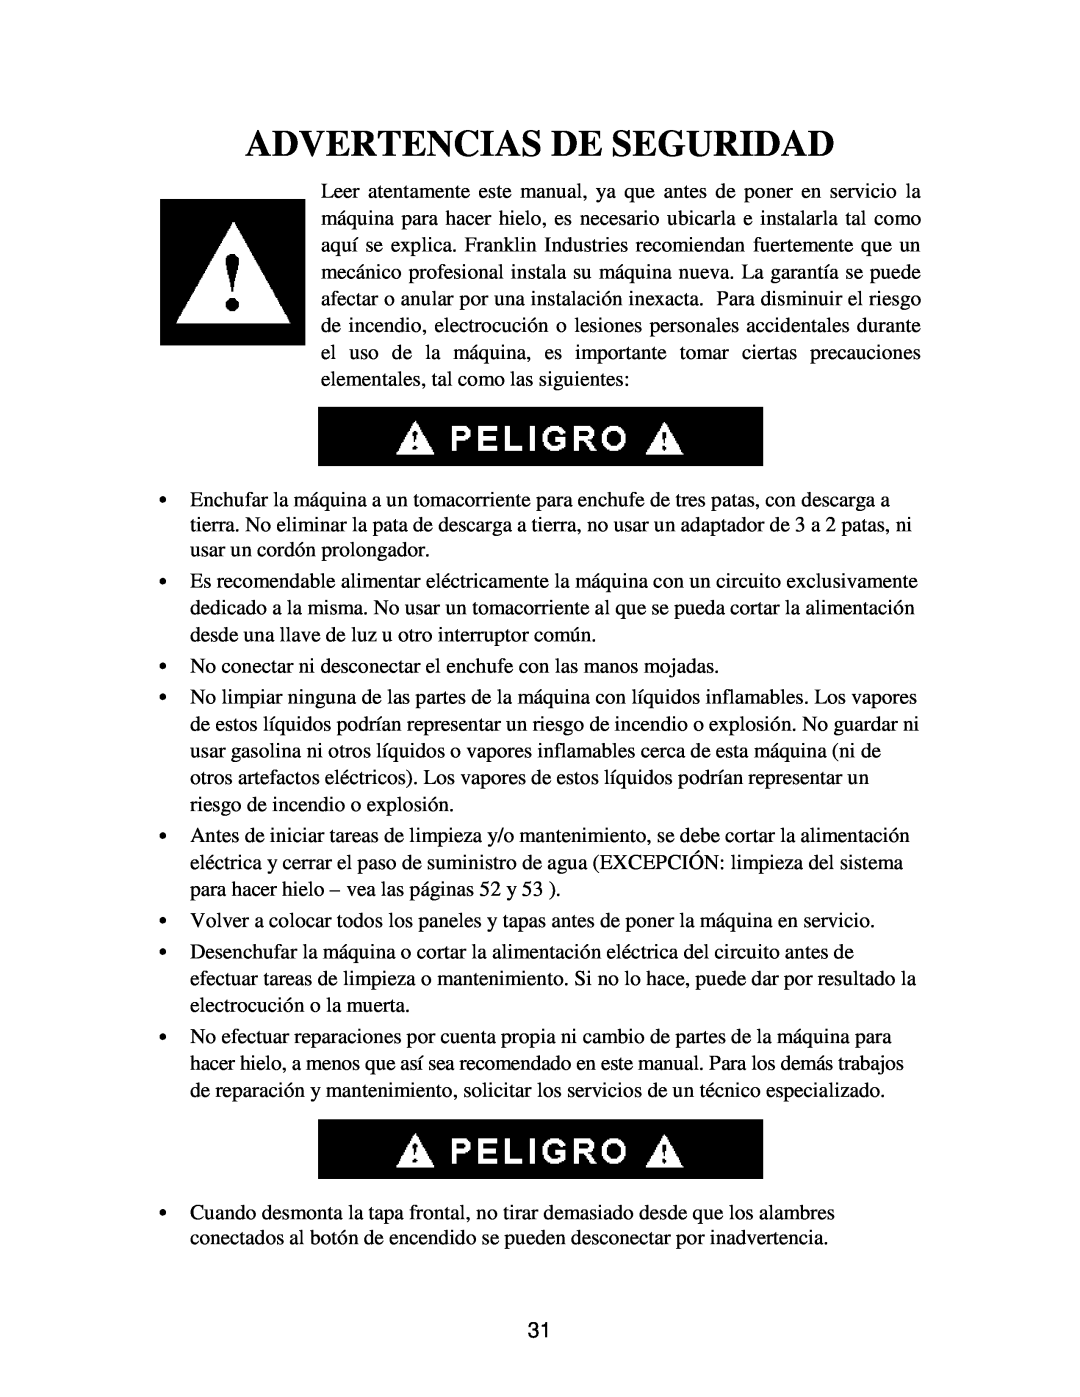 Franklin Industries, L.L.C FIM90, FIM120 user manual Advertencias De Seguridad 